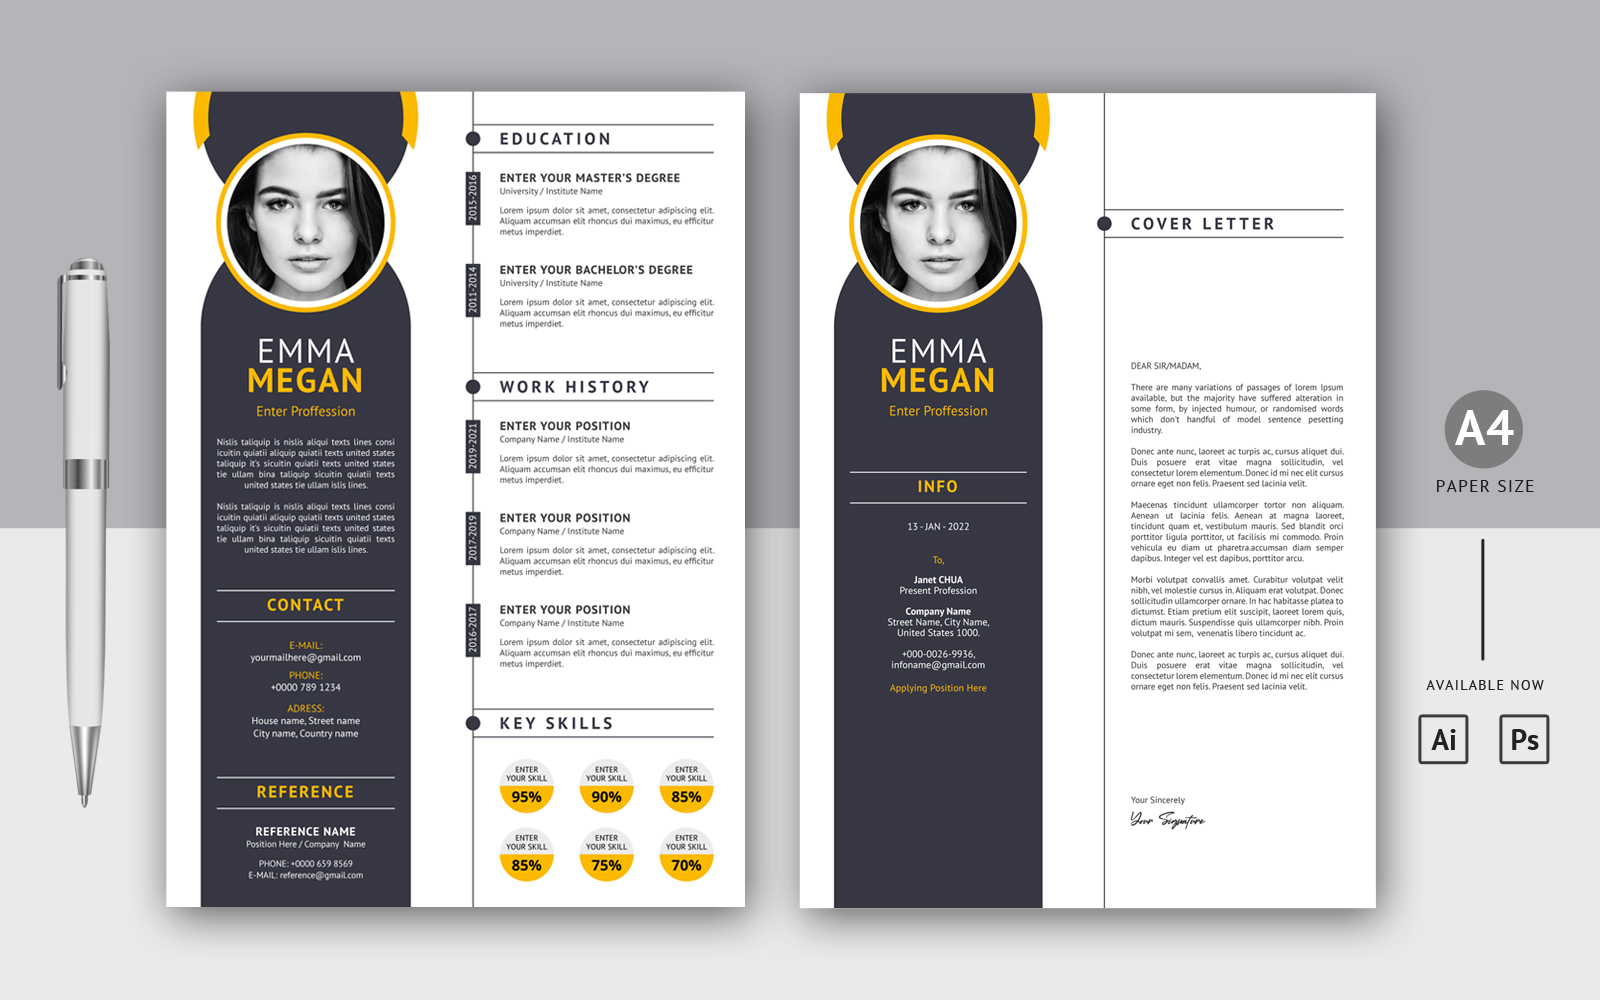 Emma Megan - Professional Creative CV Layout Printable Resume Template